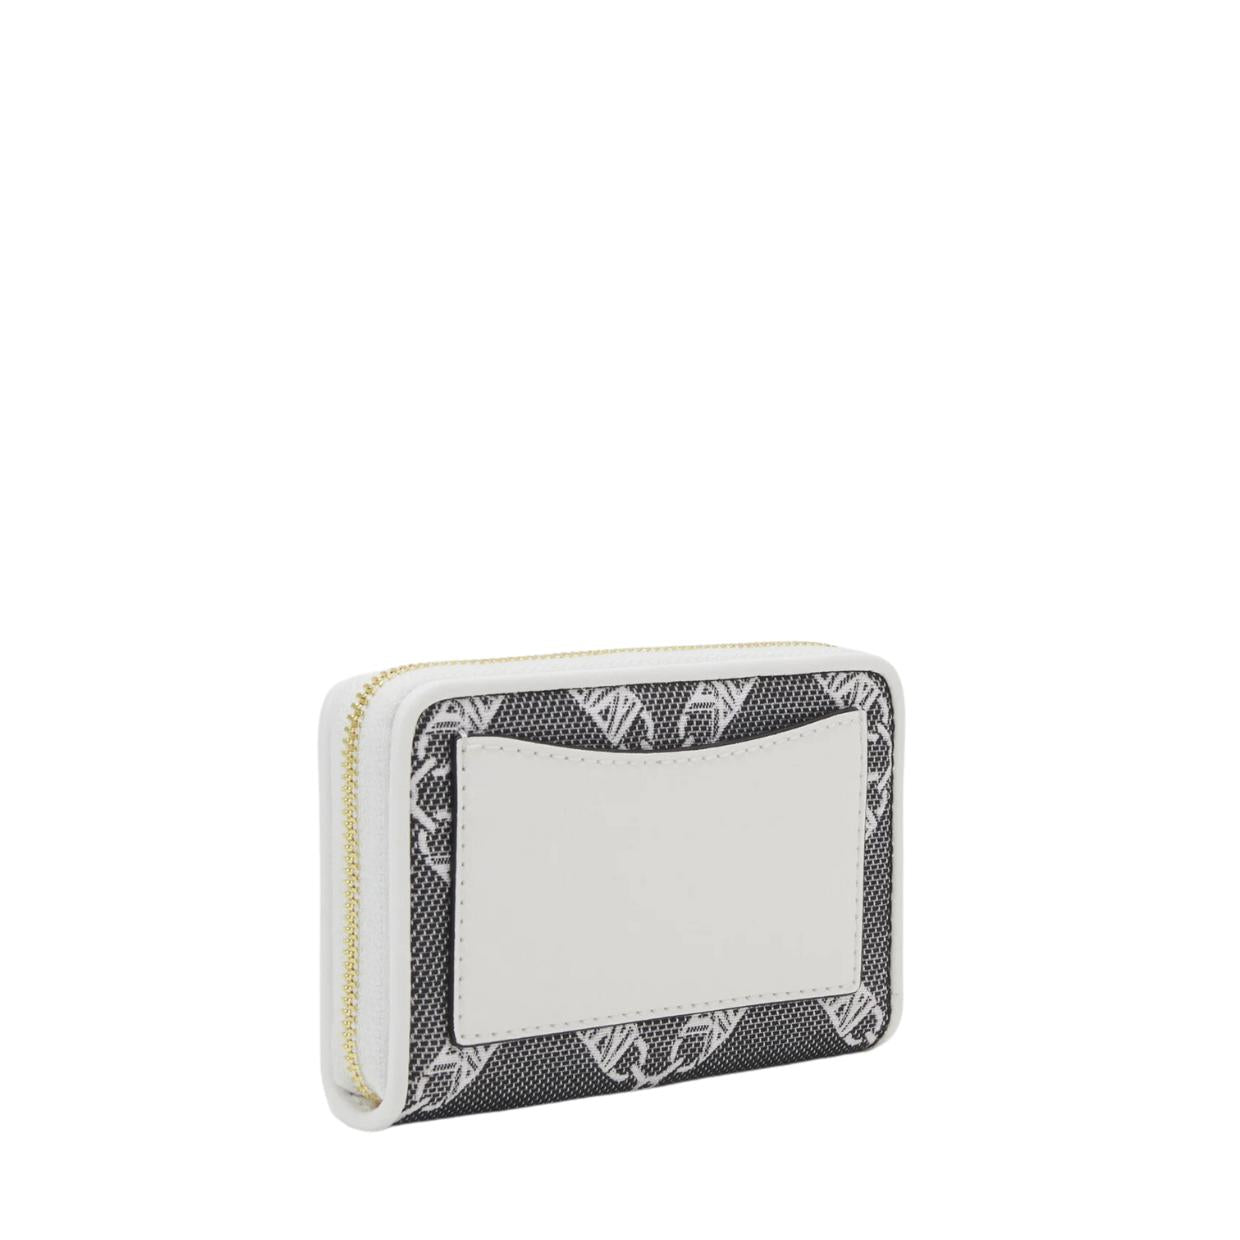 Michael Kors Logo Black/Optic White Wallet